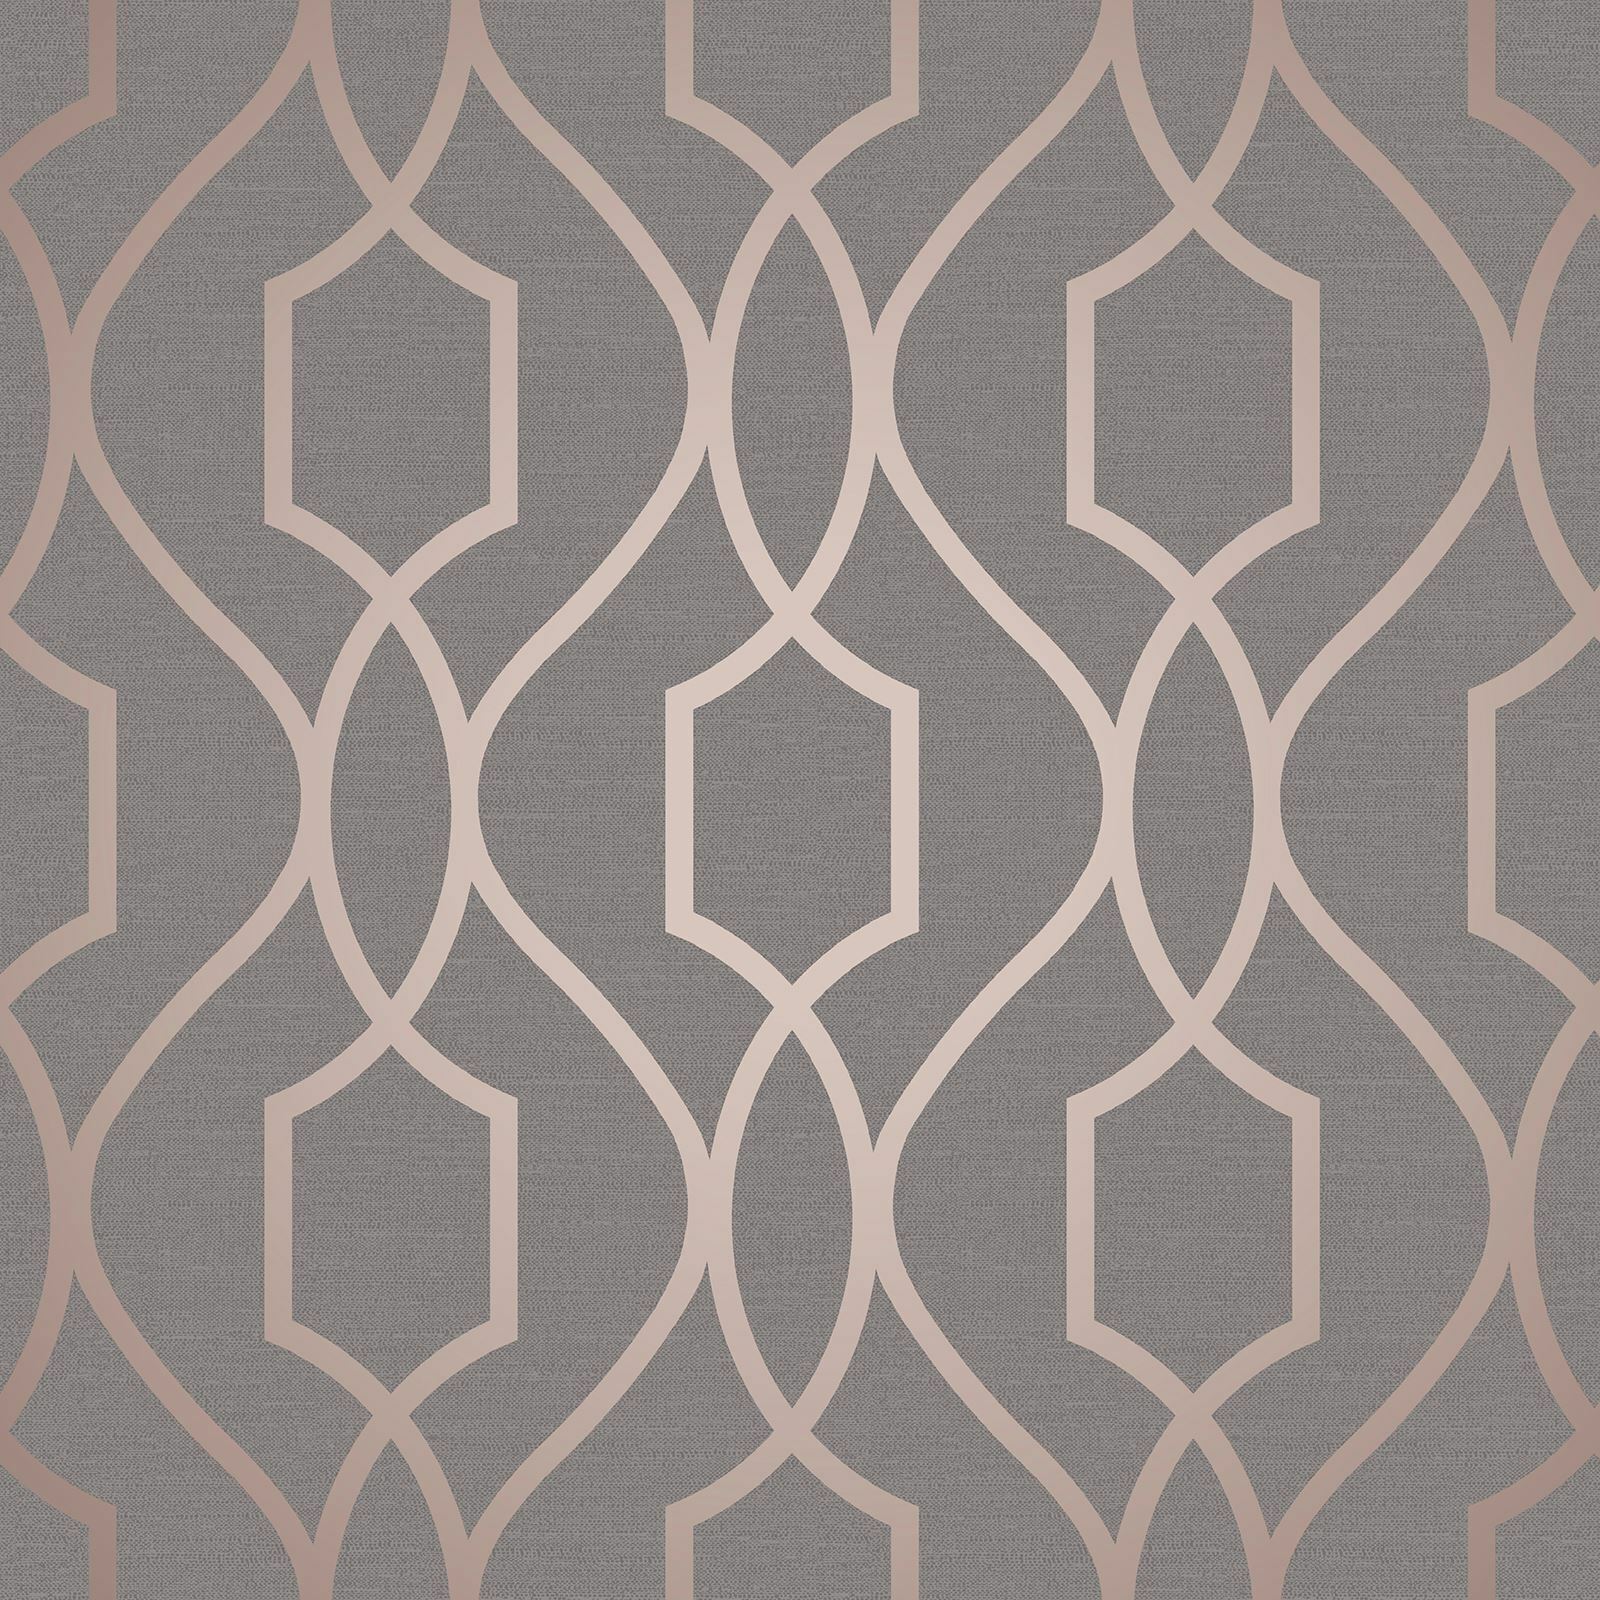 Contemporary Geometric lines modern wallpaper gray rose gold metallic  trellis 3D | eBay